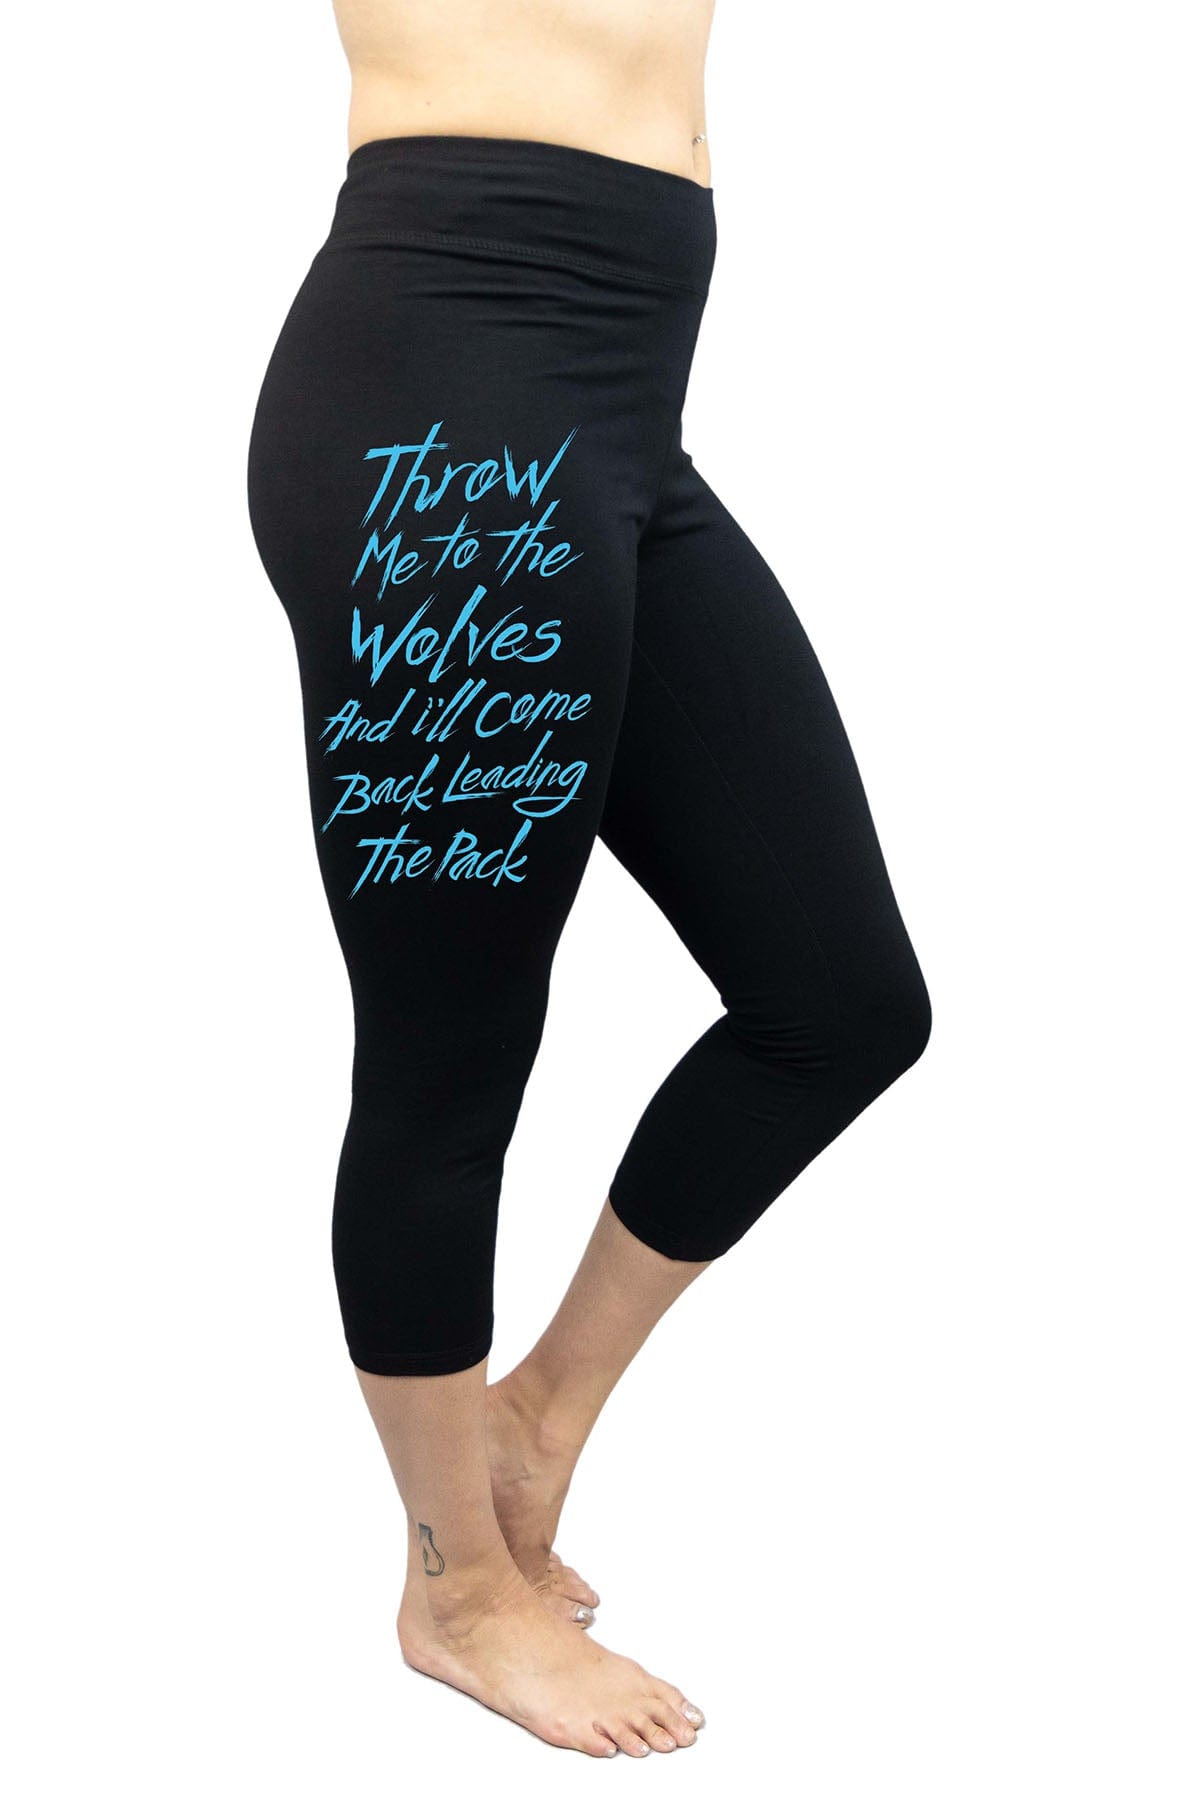 Black Wolf Capris for Women Printed Black Capri Leggings With Grey Wolf  Illustration on Both Sides of Capri Pants, Perfect Yoga Wear Gift -  UK